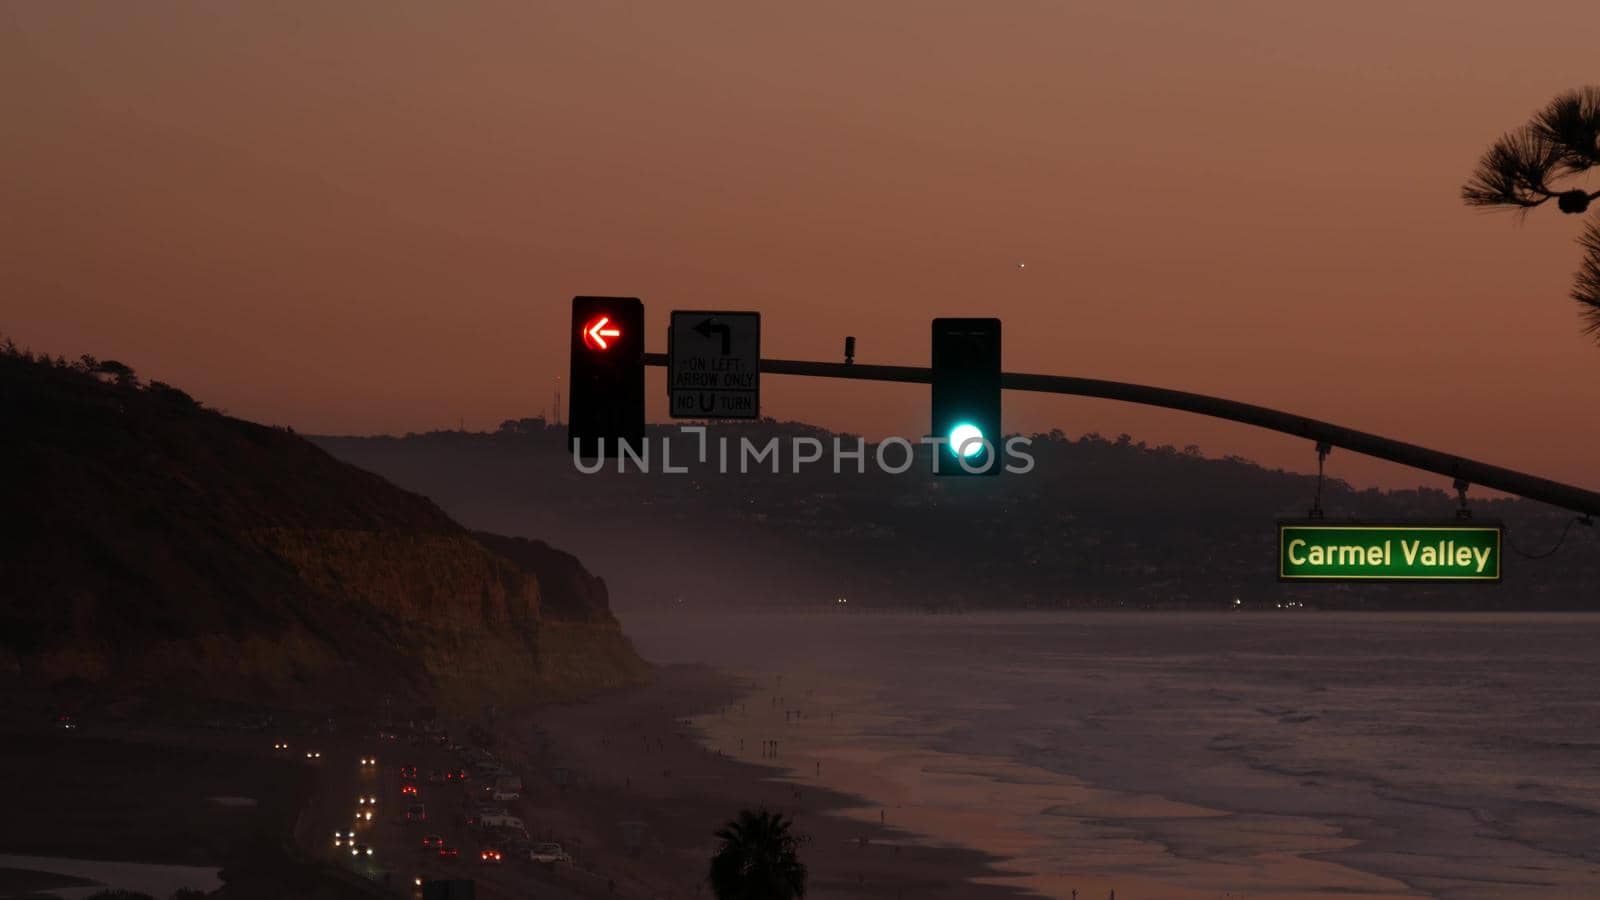 Traffic lights, pacific coast highway 1, Torrey Pines state beach, Del Mar, San Diego, California USA. Coastal road trip vacations. Roadtrip along ocean, freeway 101. Carmel Valley sign, twilight dusk